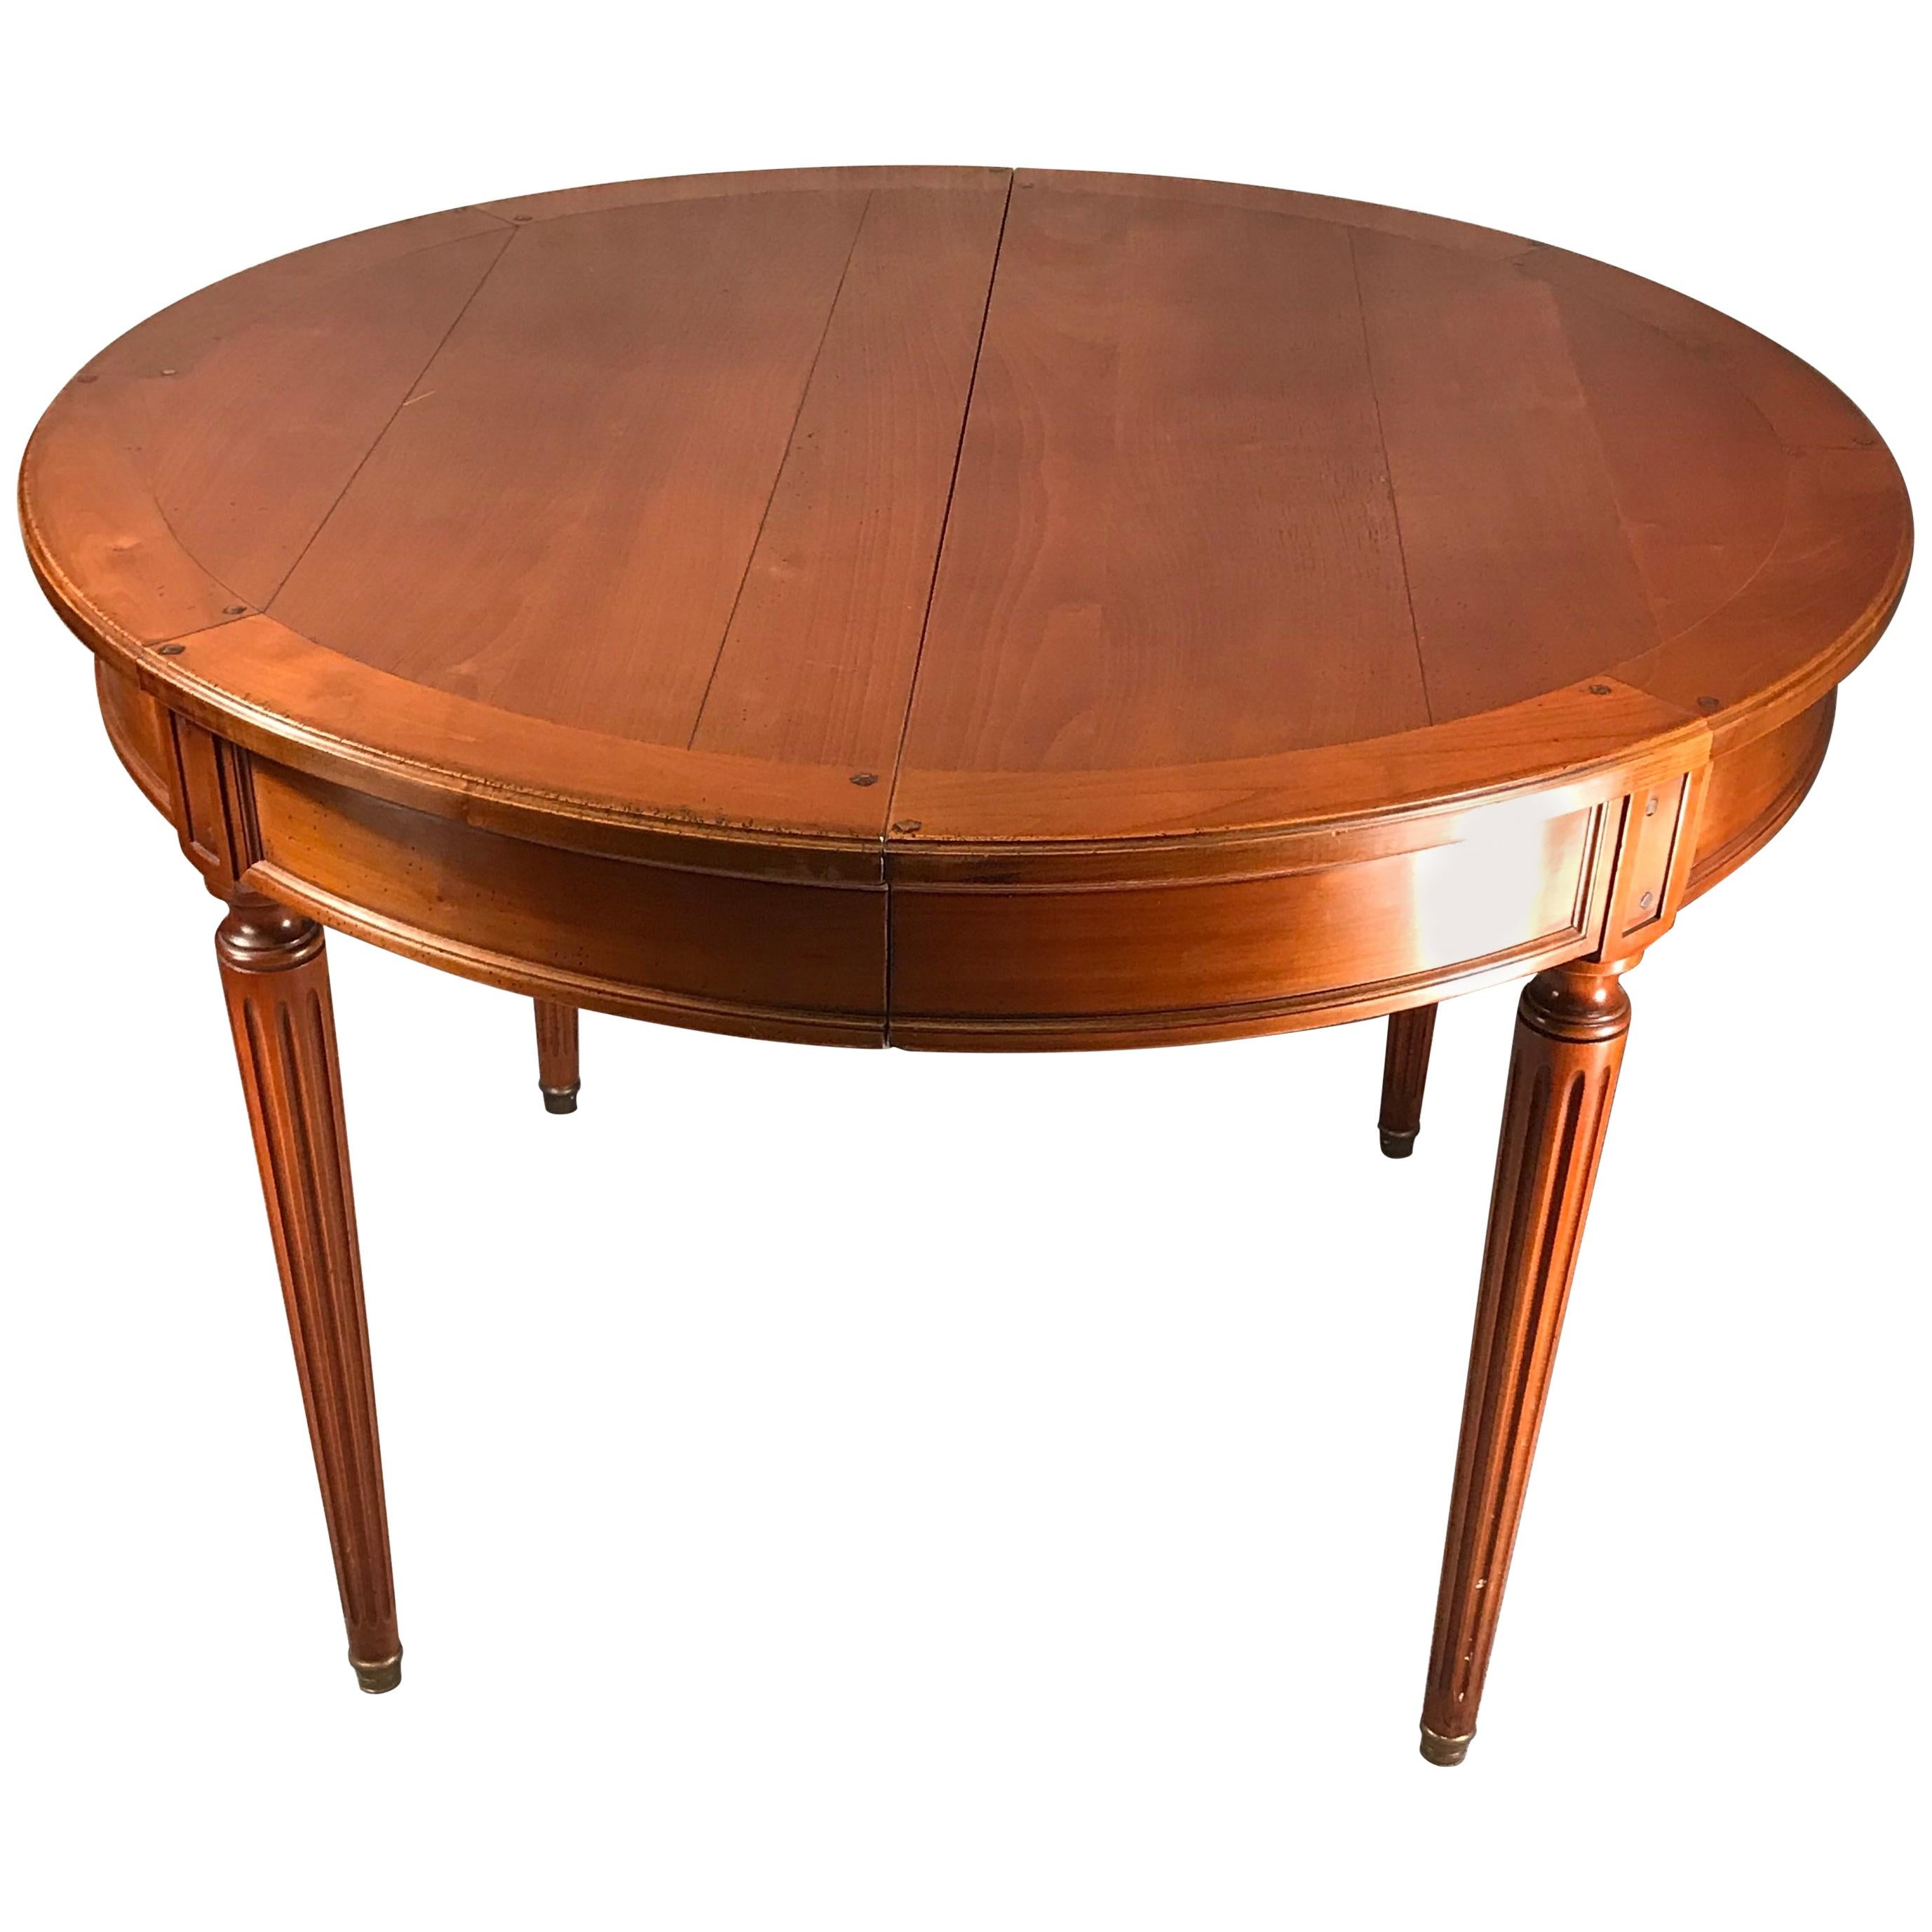 Louis XVI Style Table Extendable, France, circa 1900